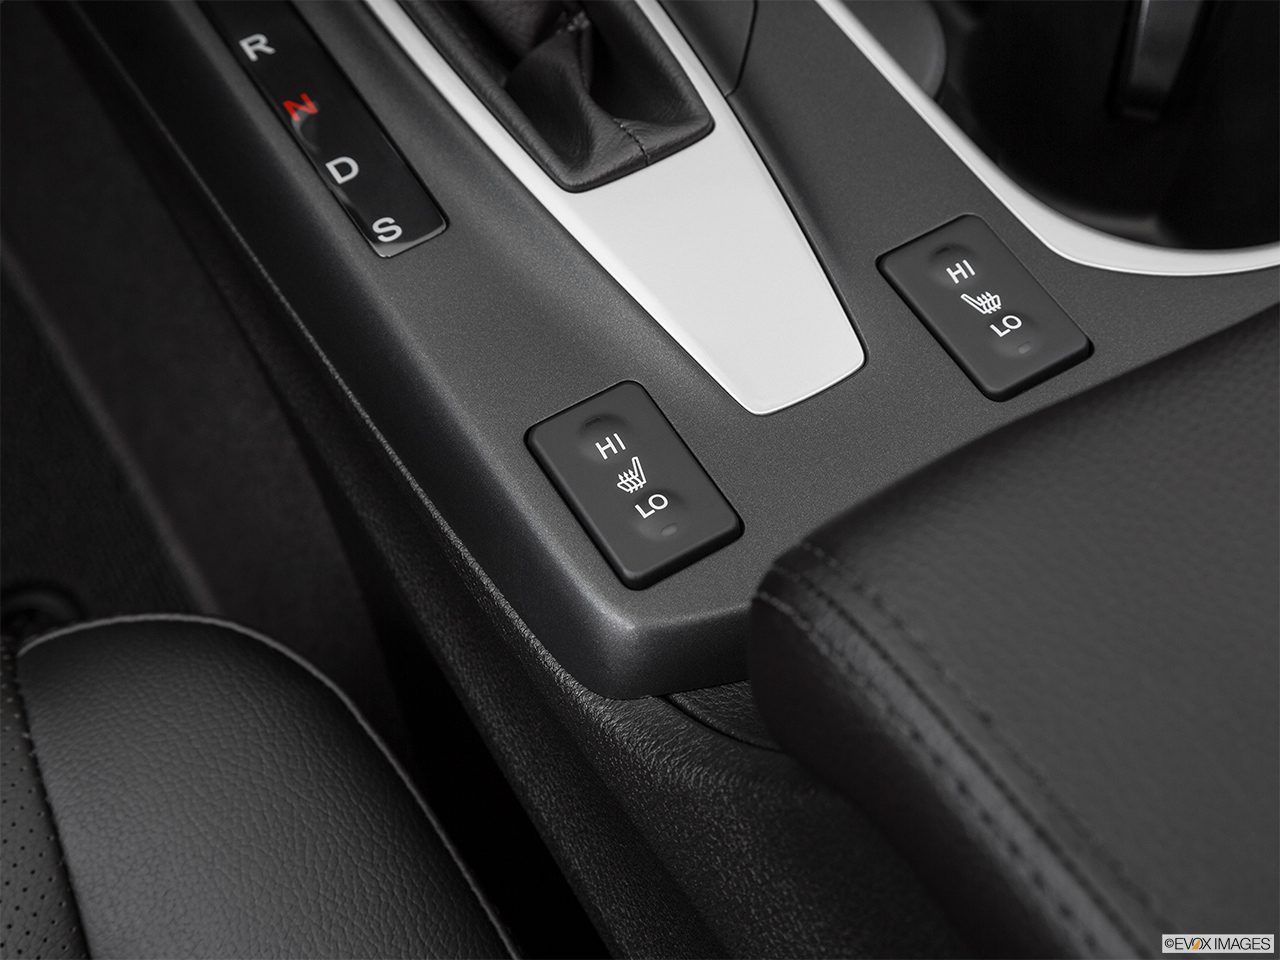 2017 Acura RDX AWD Heated Seats Control 